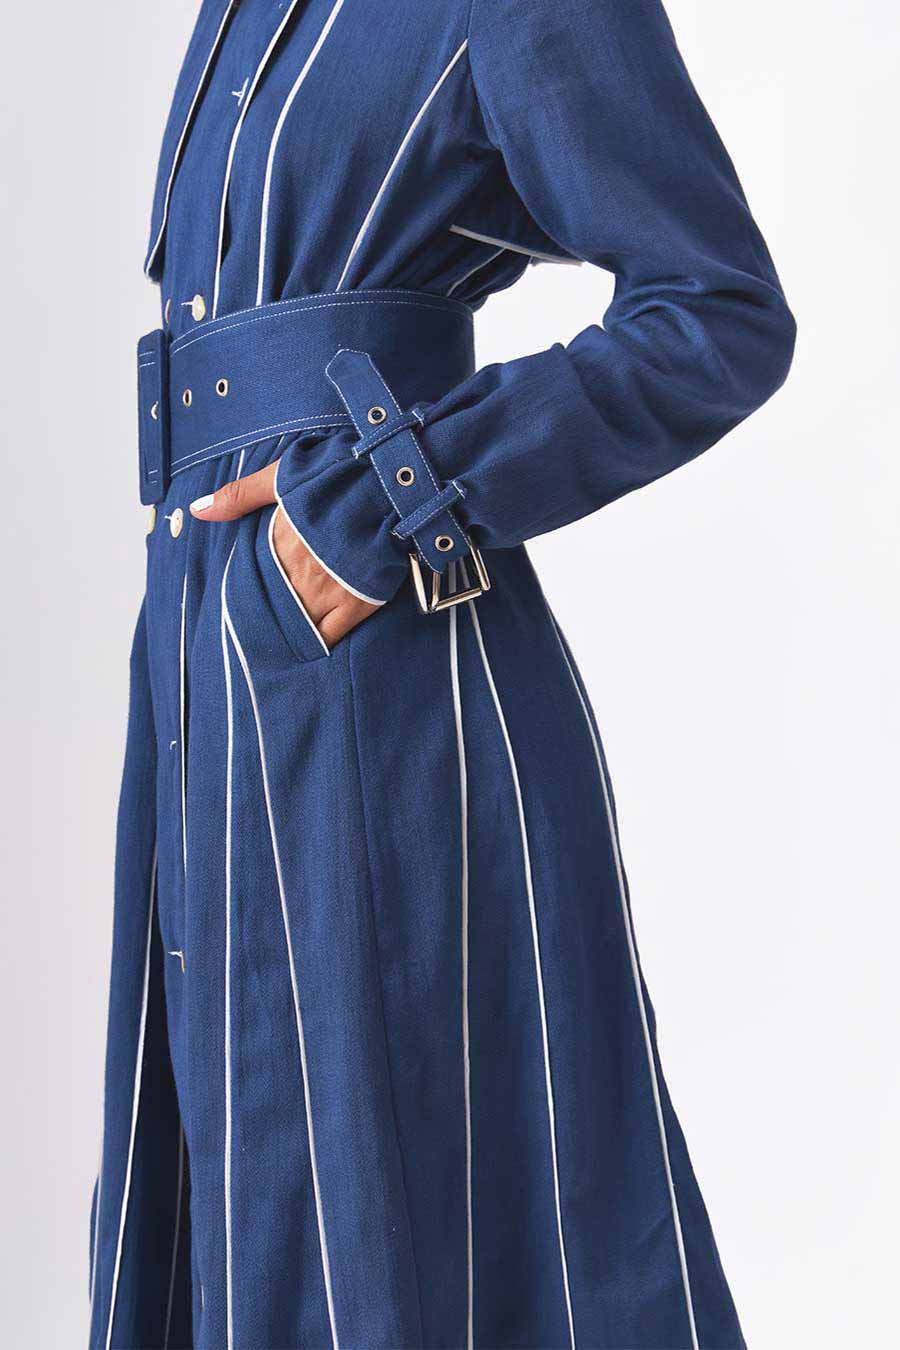 PRISCILLA - Khadi Denim Blue Trench Dress